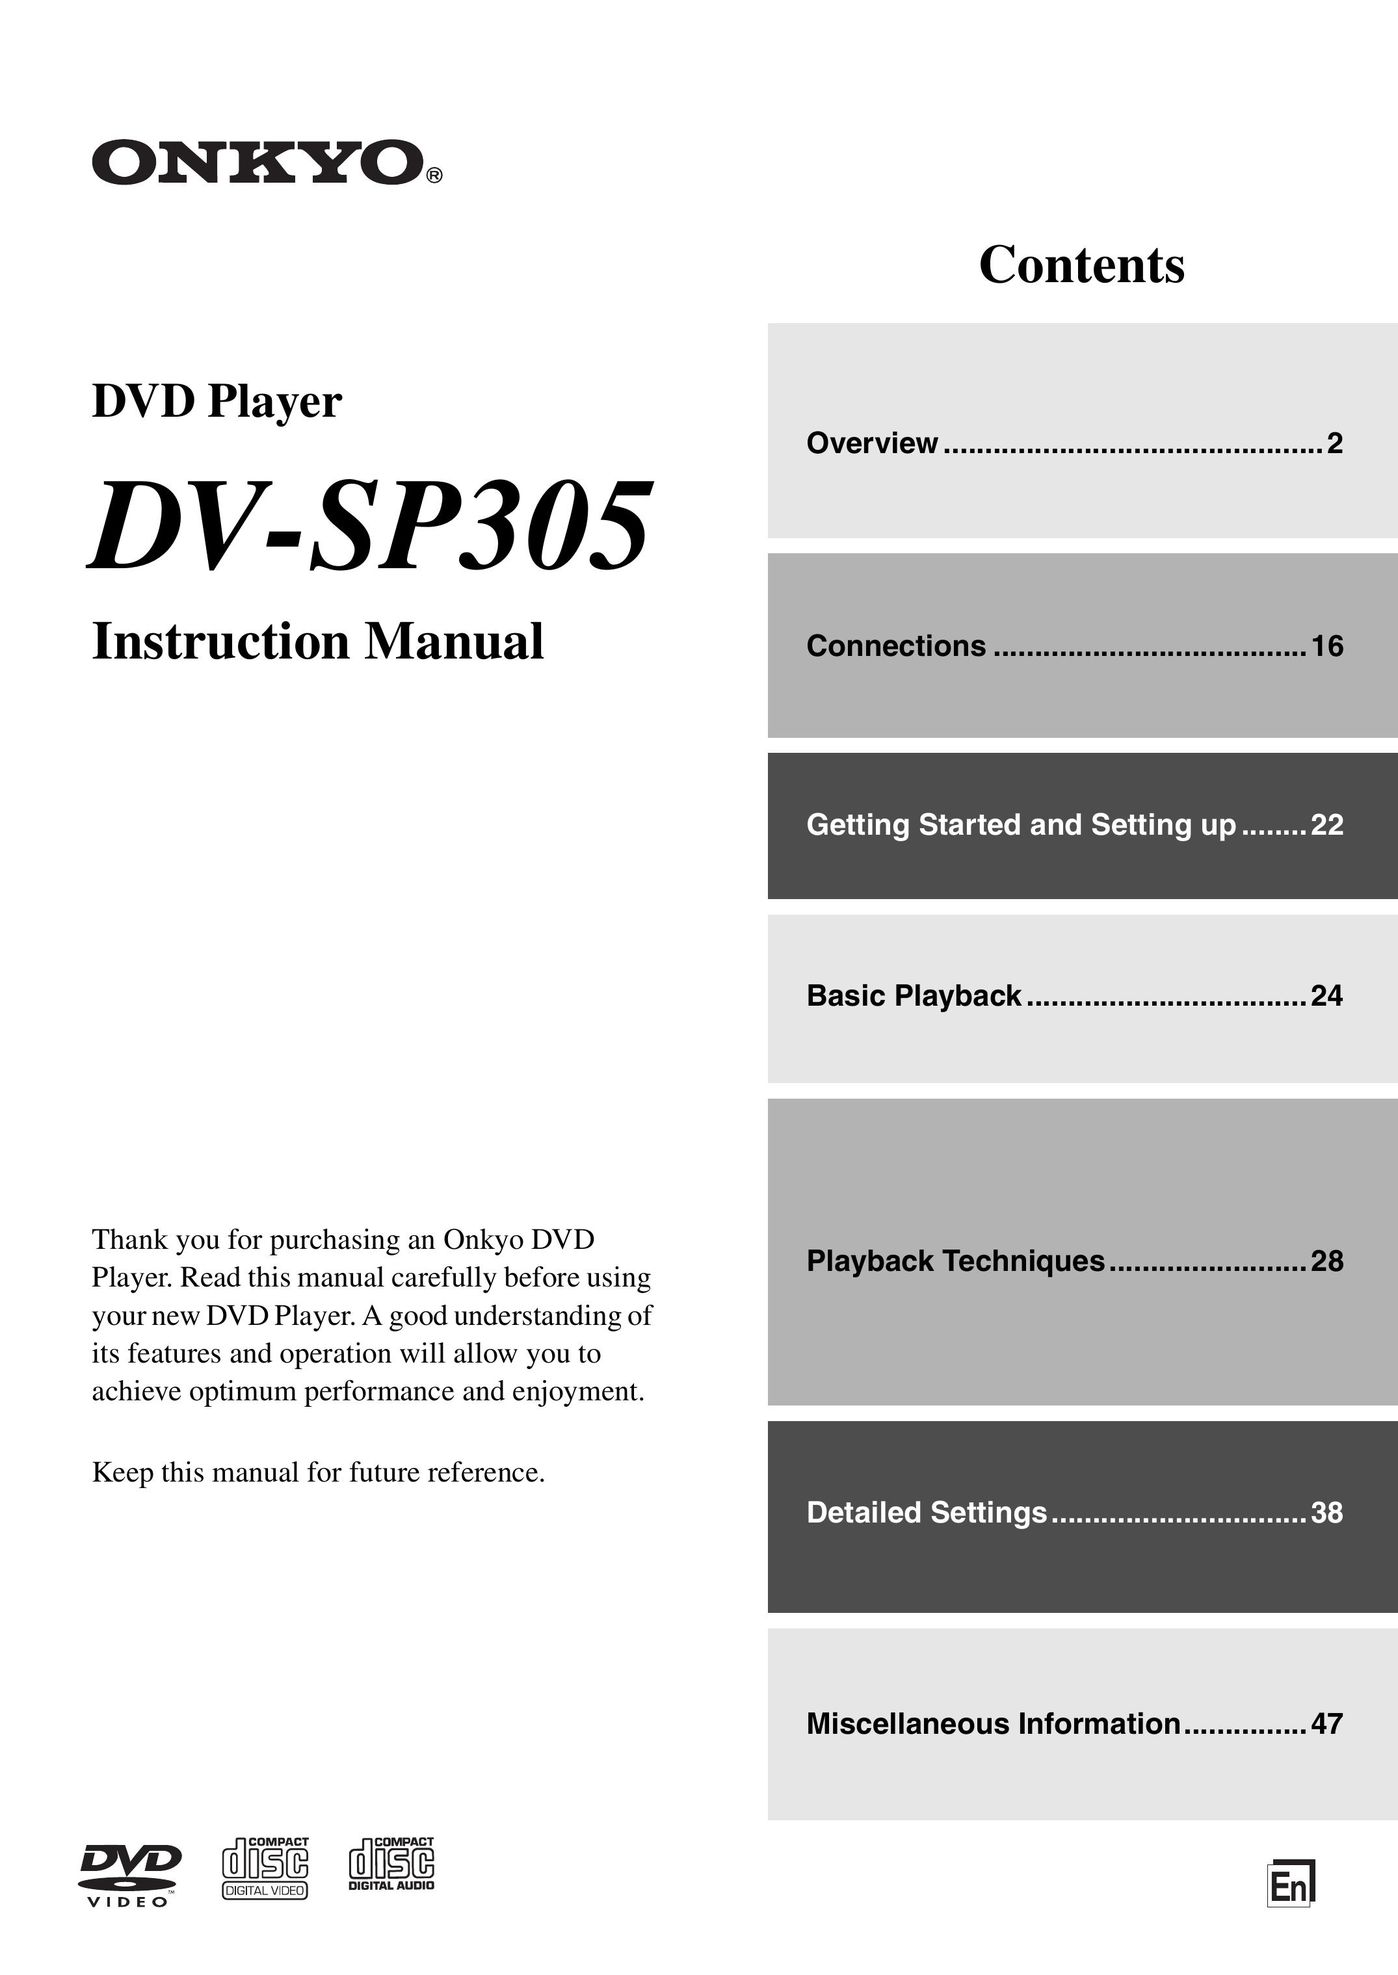 Onkyo DV-SP305 DVD Player User Manual